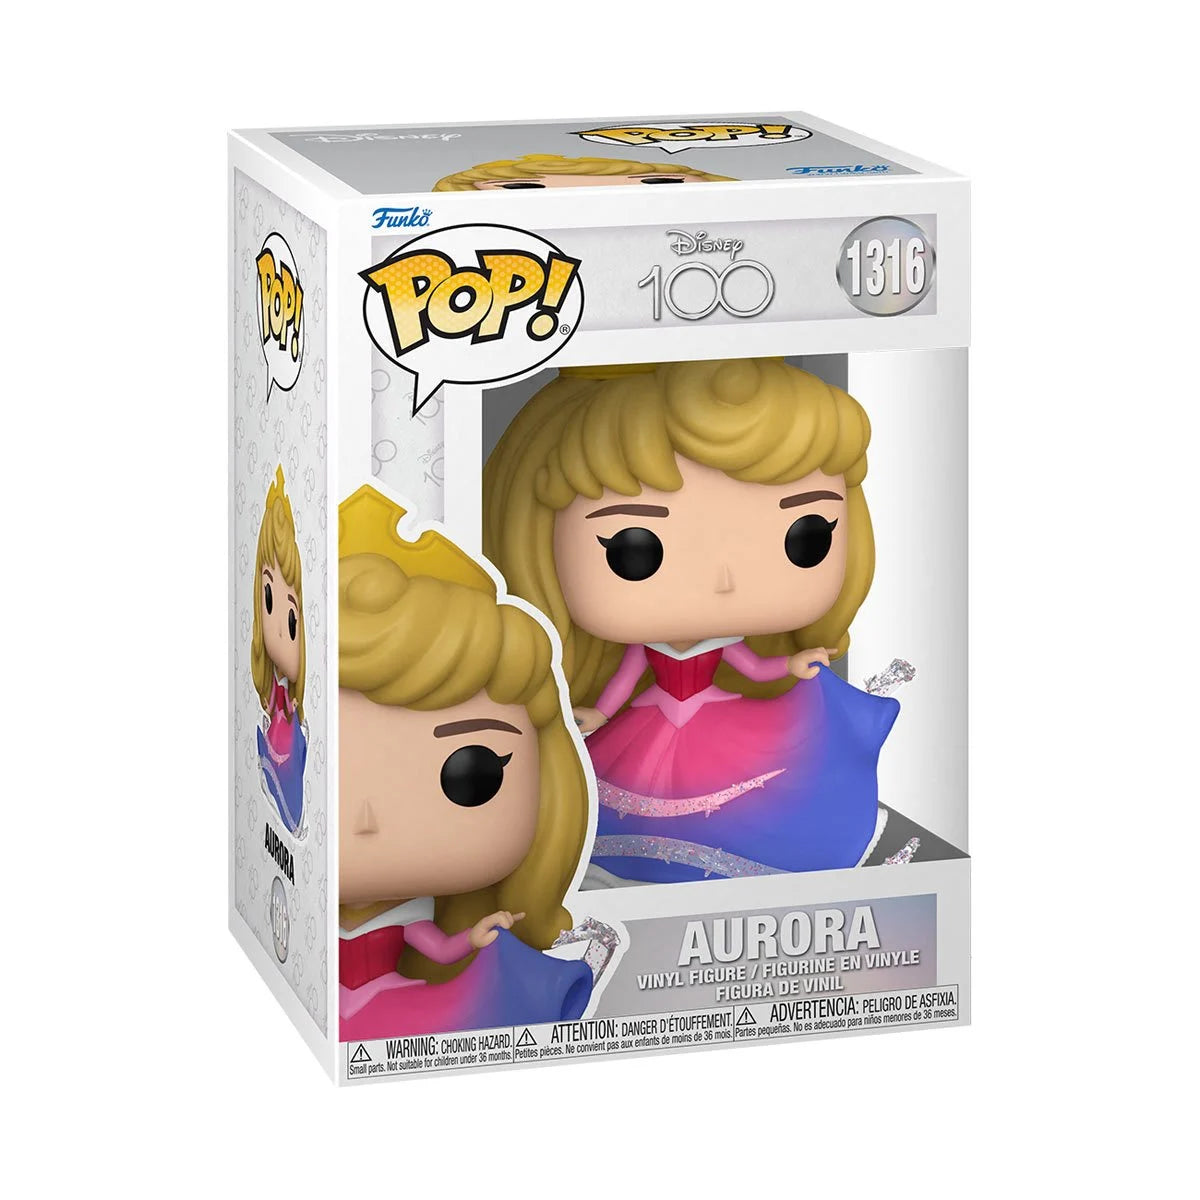 Aurora Disney 100 Pop! Vinyl Figure